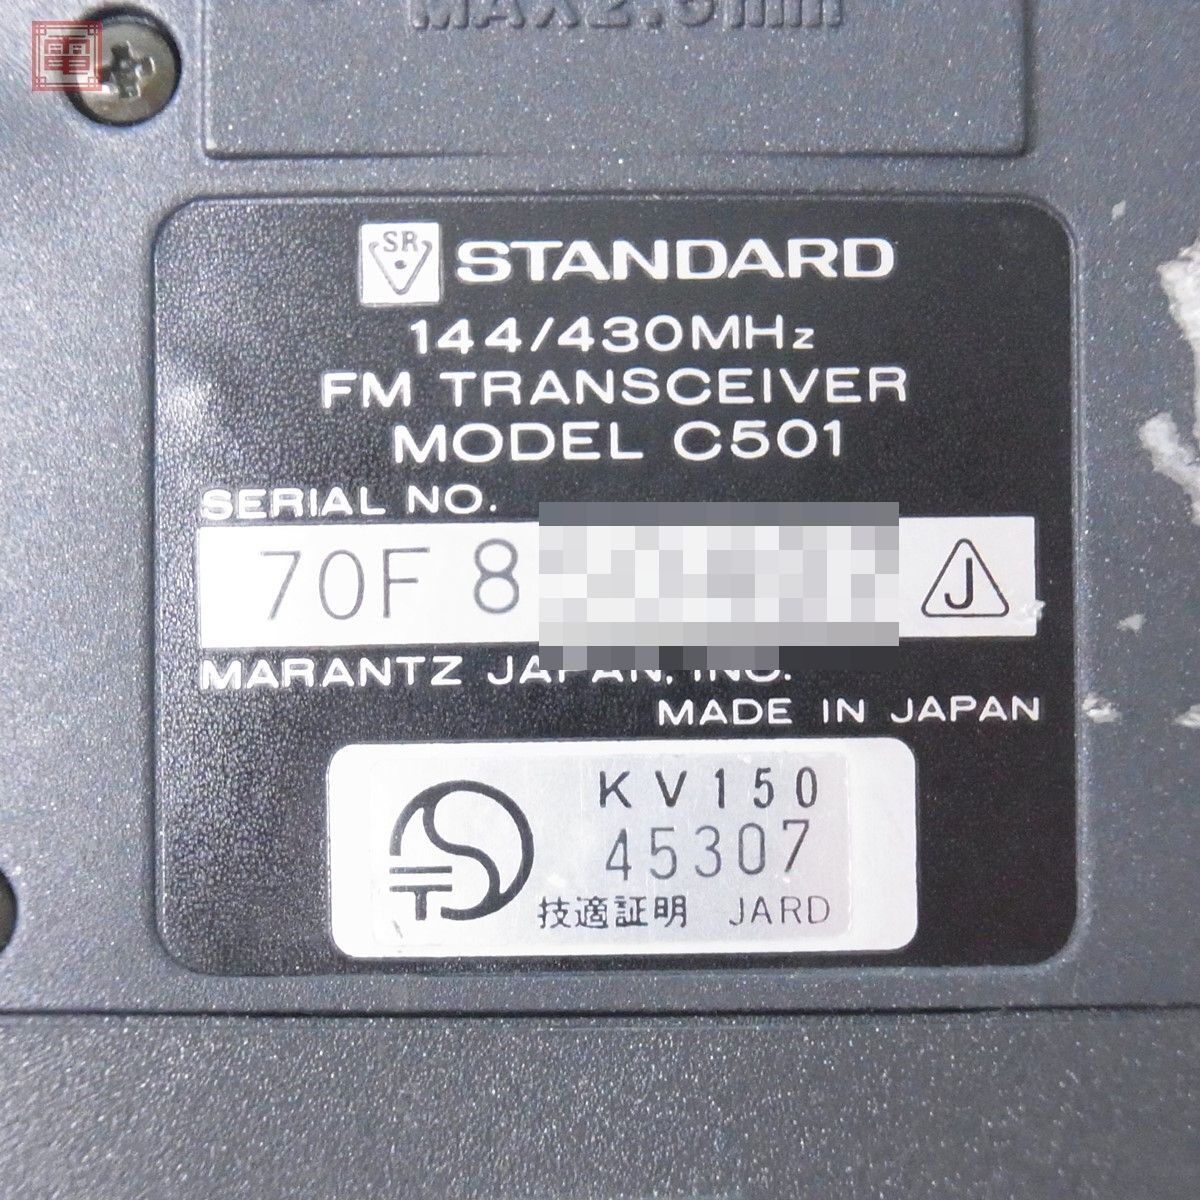  Japan Marantz STANDARD C501 144/430MHz handy transceiver speaker Mike attaching [10